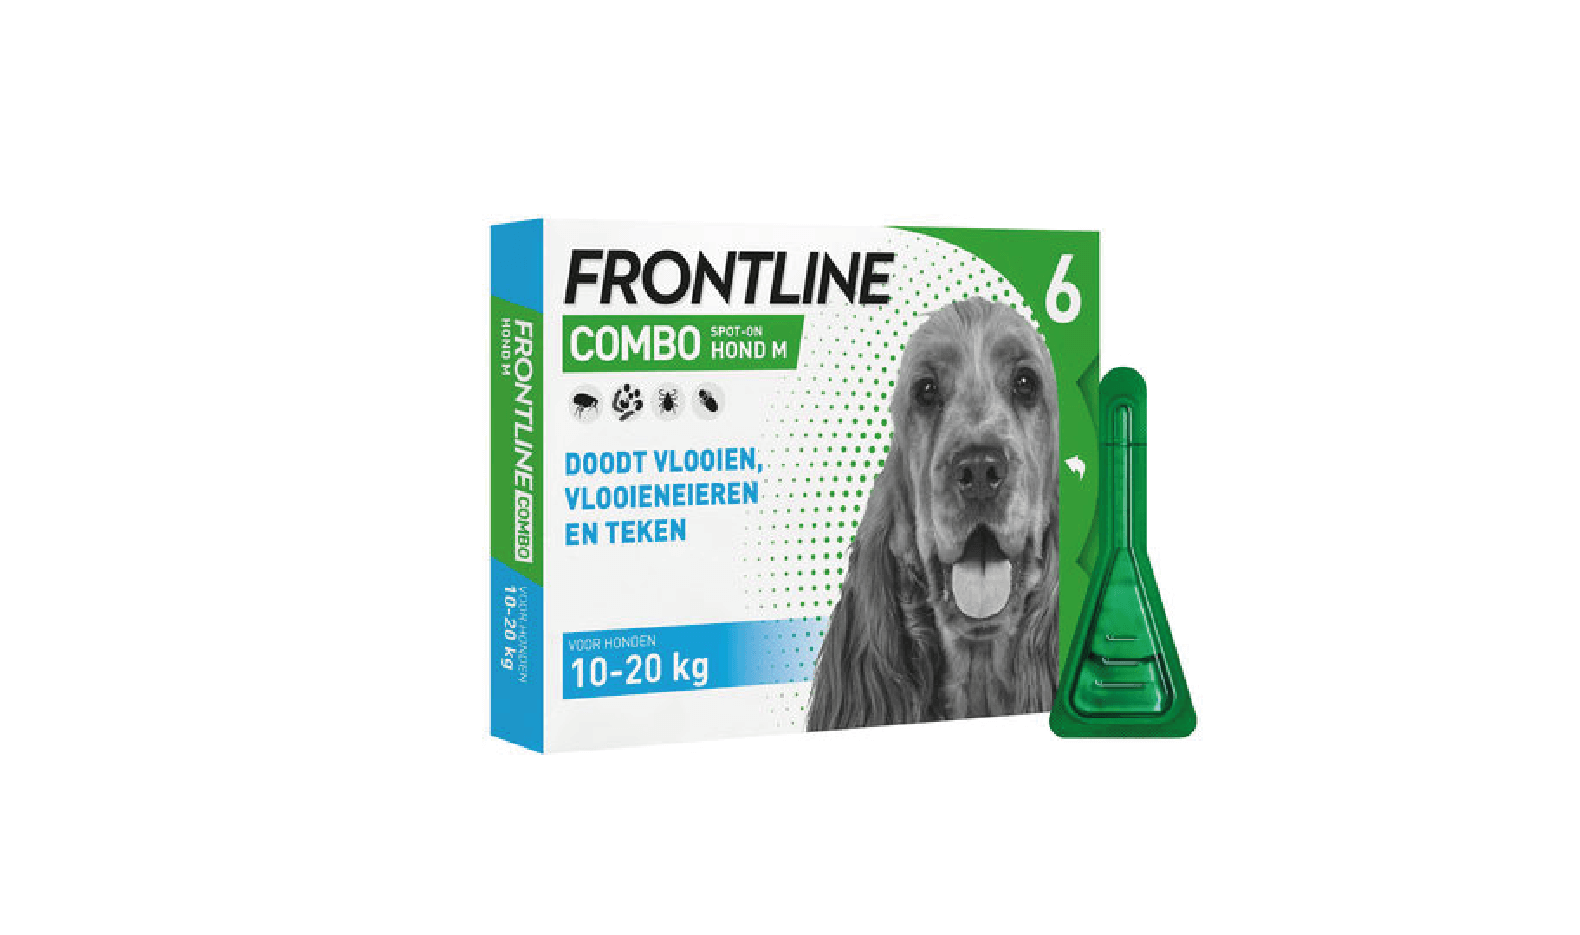 Frontline Combo Spoton Hund felmo